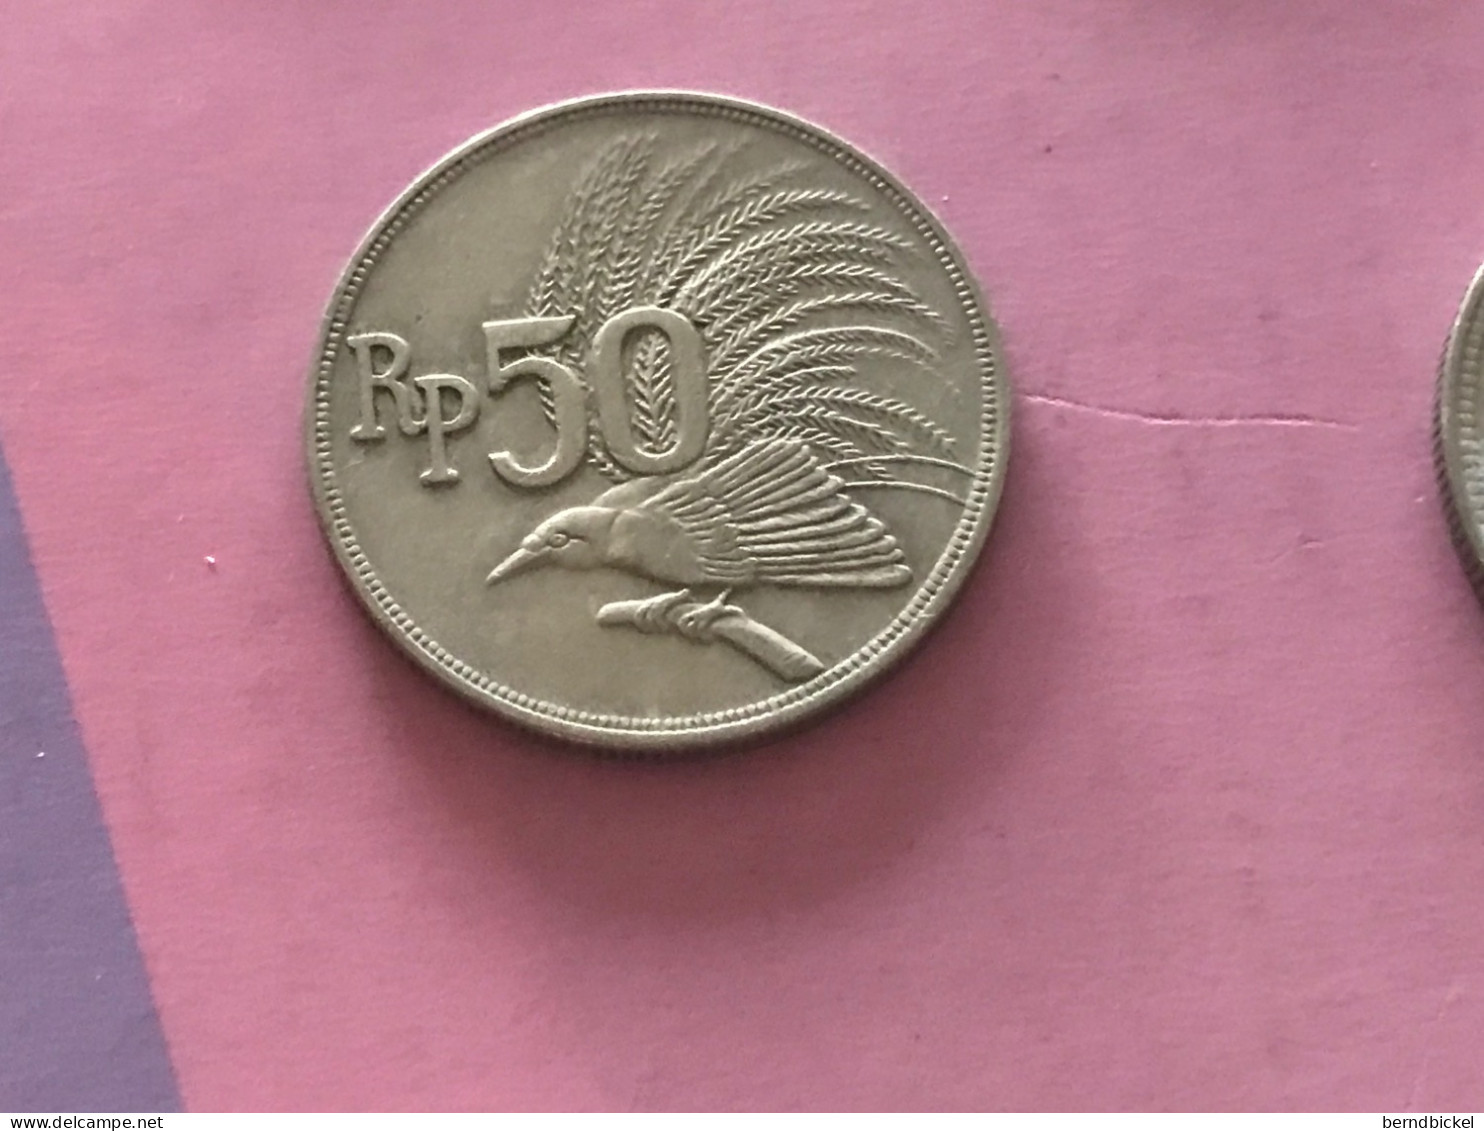 Münze Münzen Umlaufmünze Indonesien 50 Rupien 1971 - Indonesien